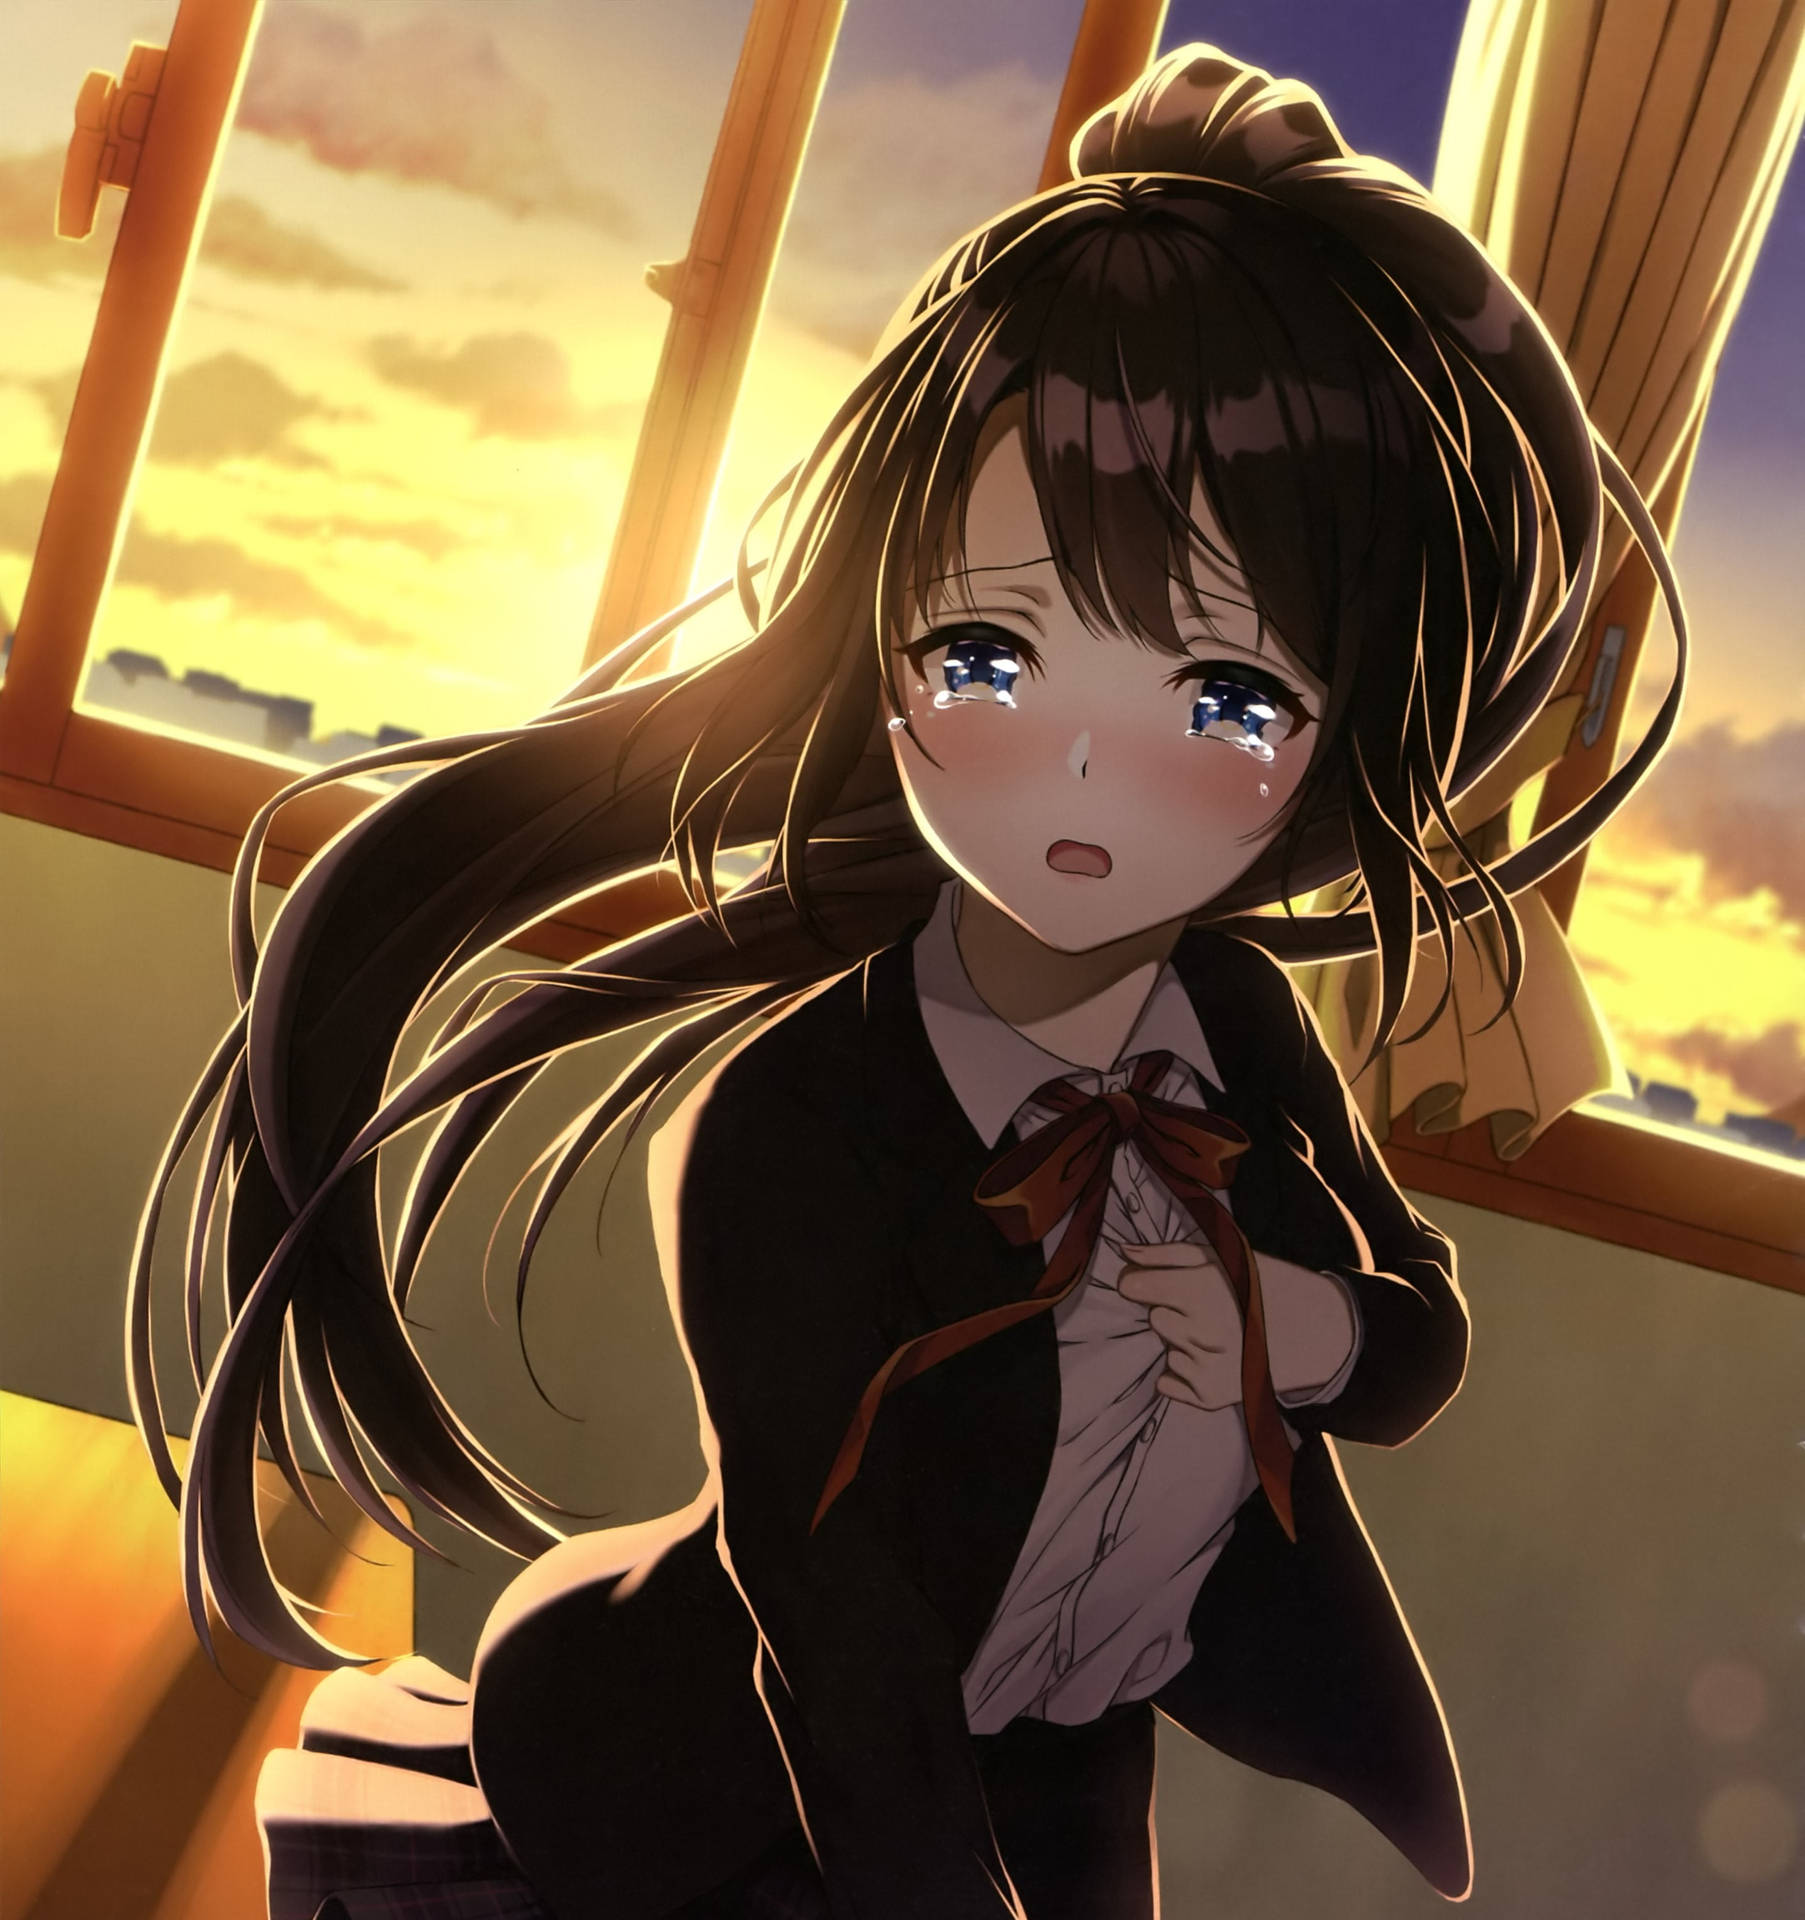 Anime - Crying Girl wallpaper by IshtiakHossain - Download on ZEDGE™ | 09c4